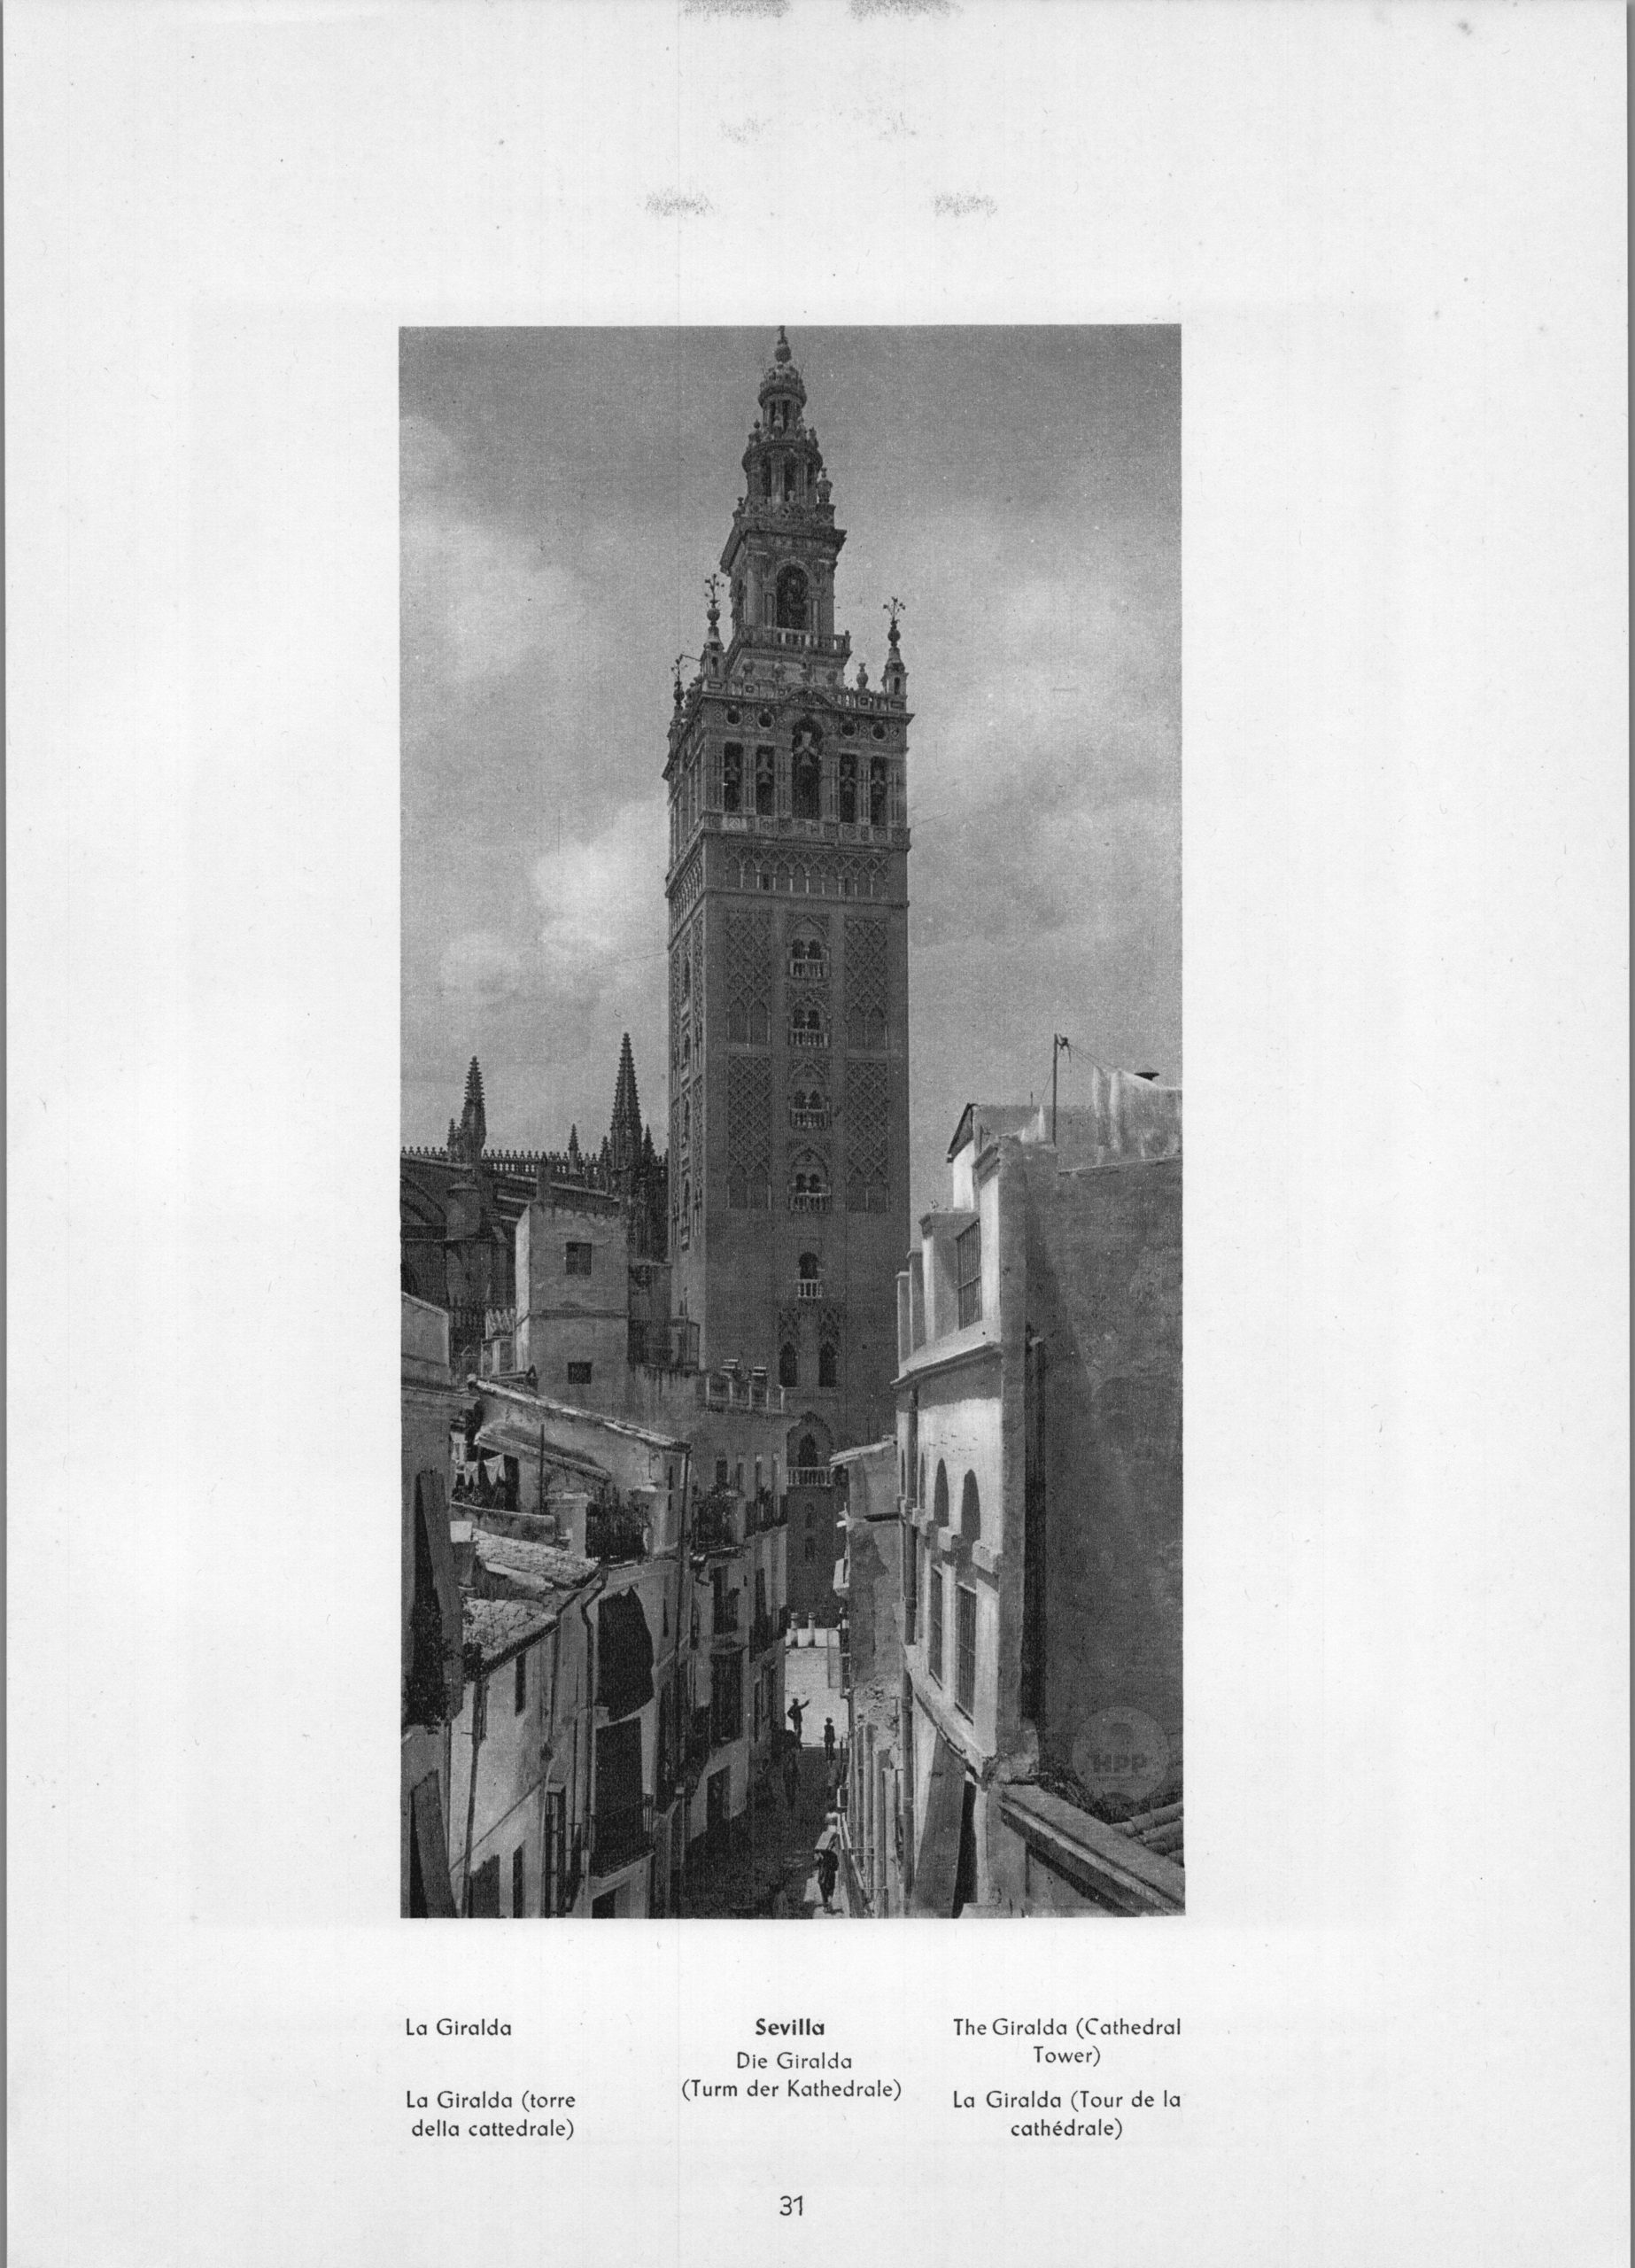 Sevilla Giralda - The Giralda (Cathedral Tower)